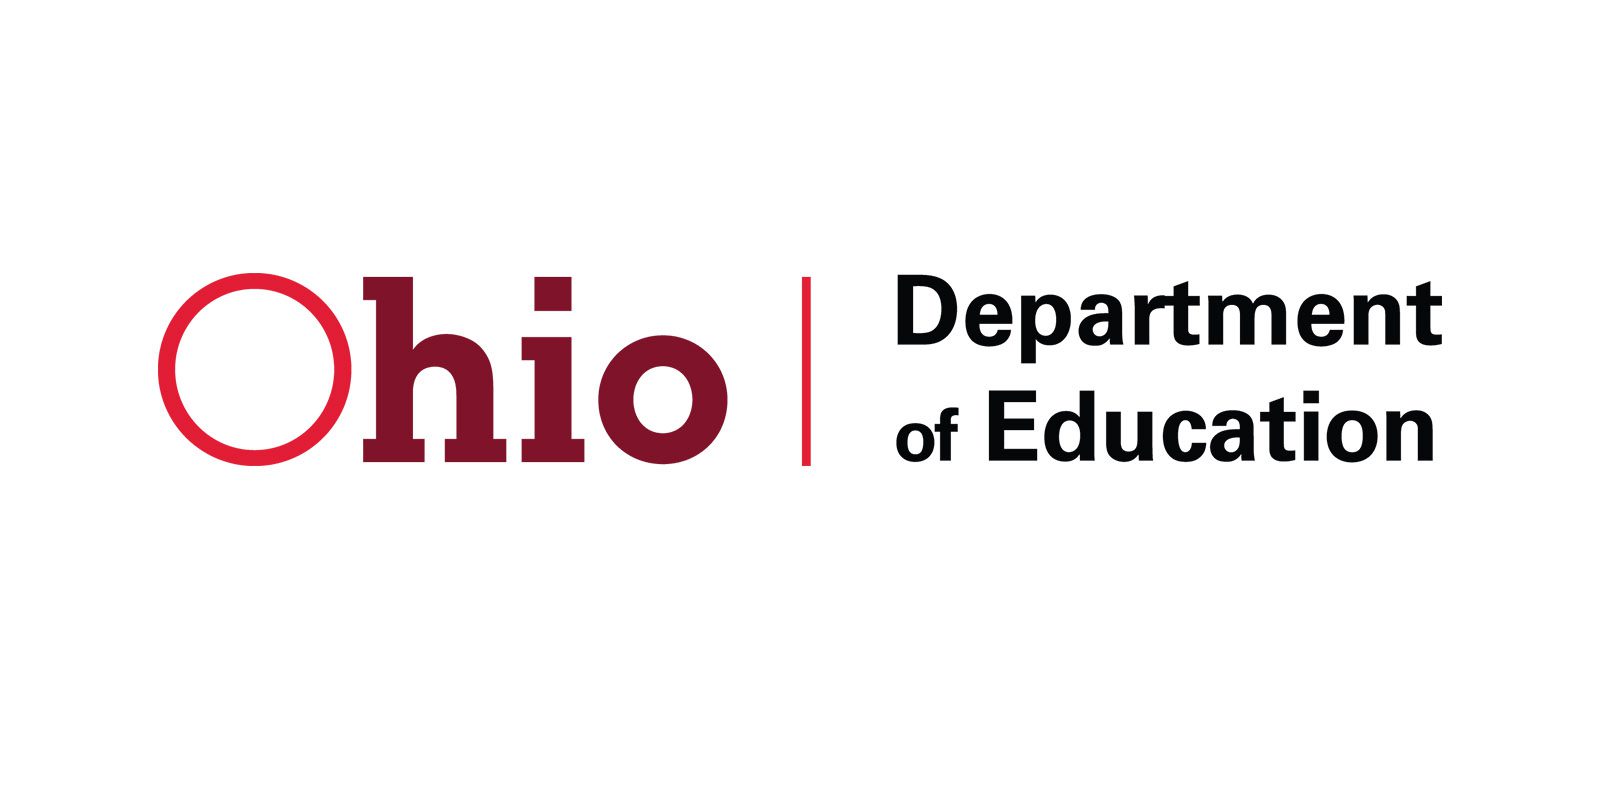 Hilliard City Schools Celebrates Results on the 2022/23 Ohio Report Cards